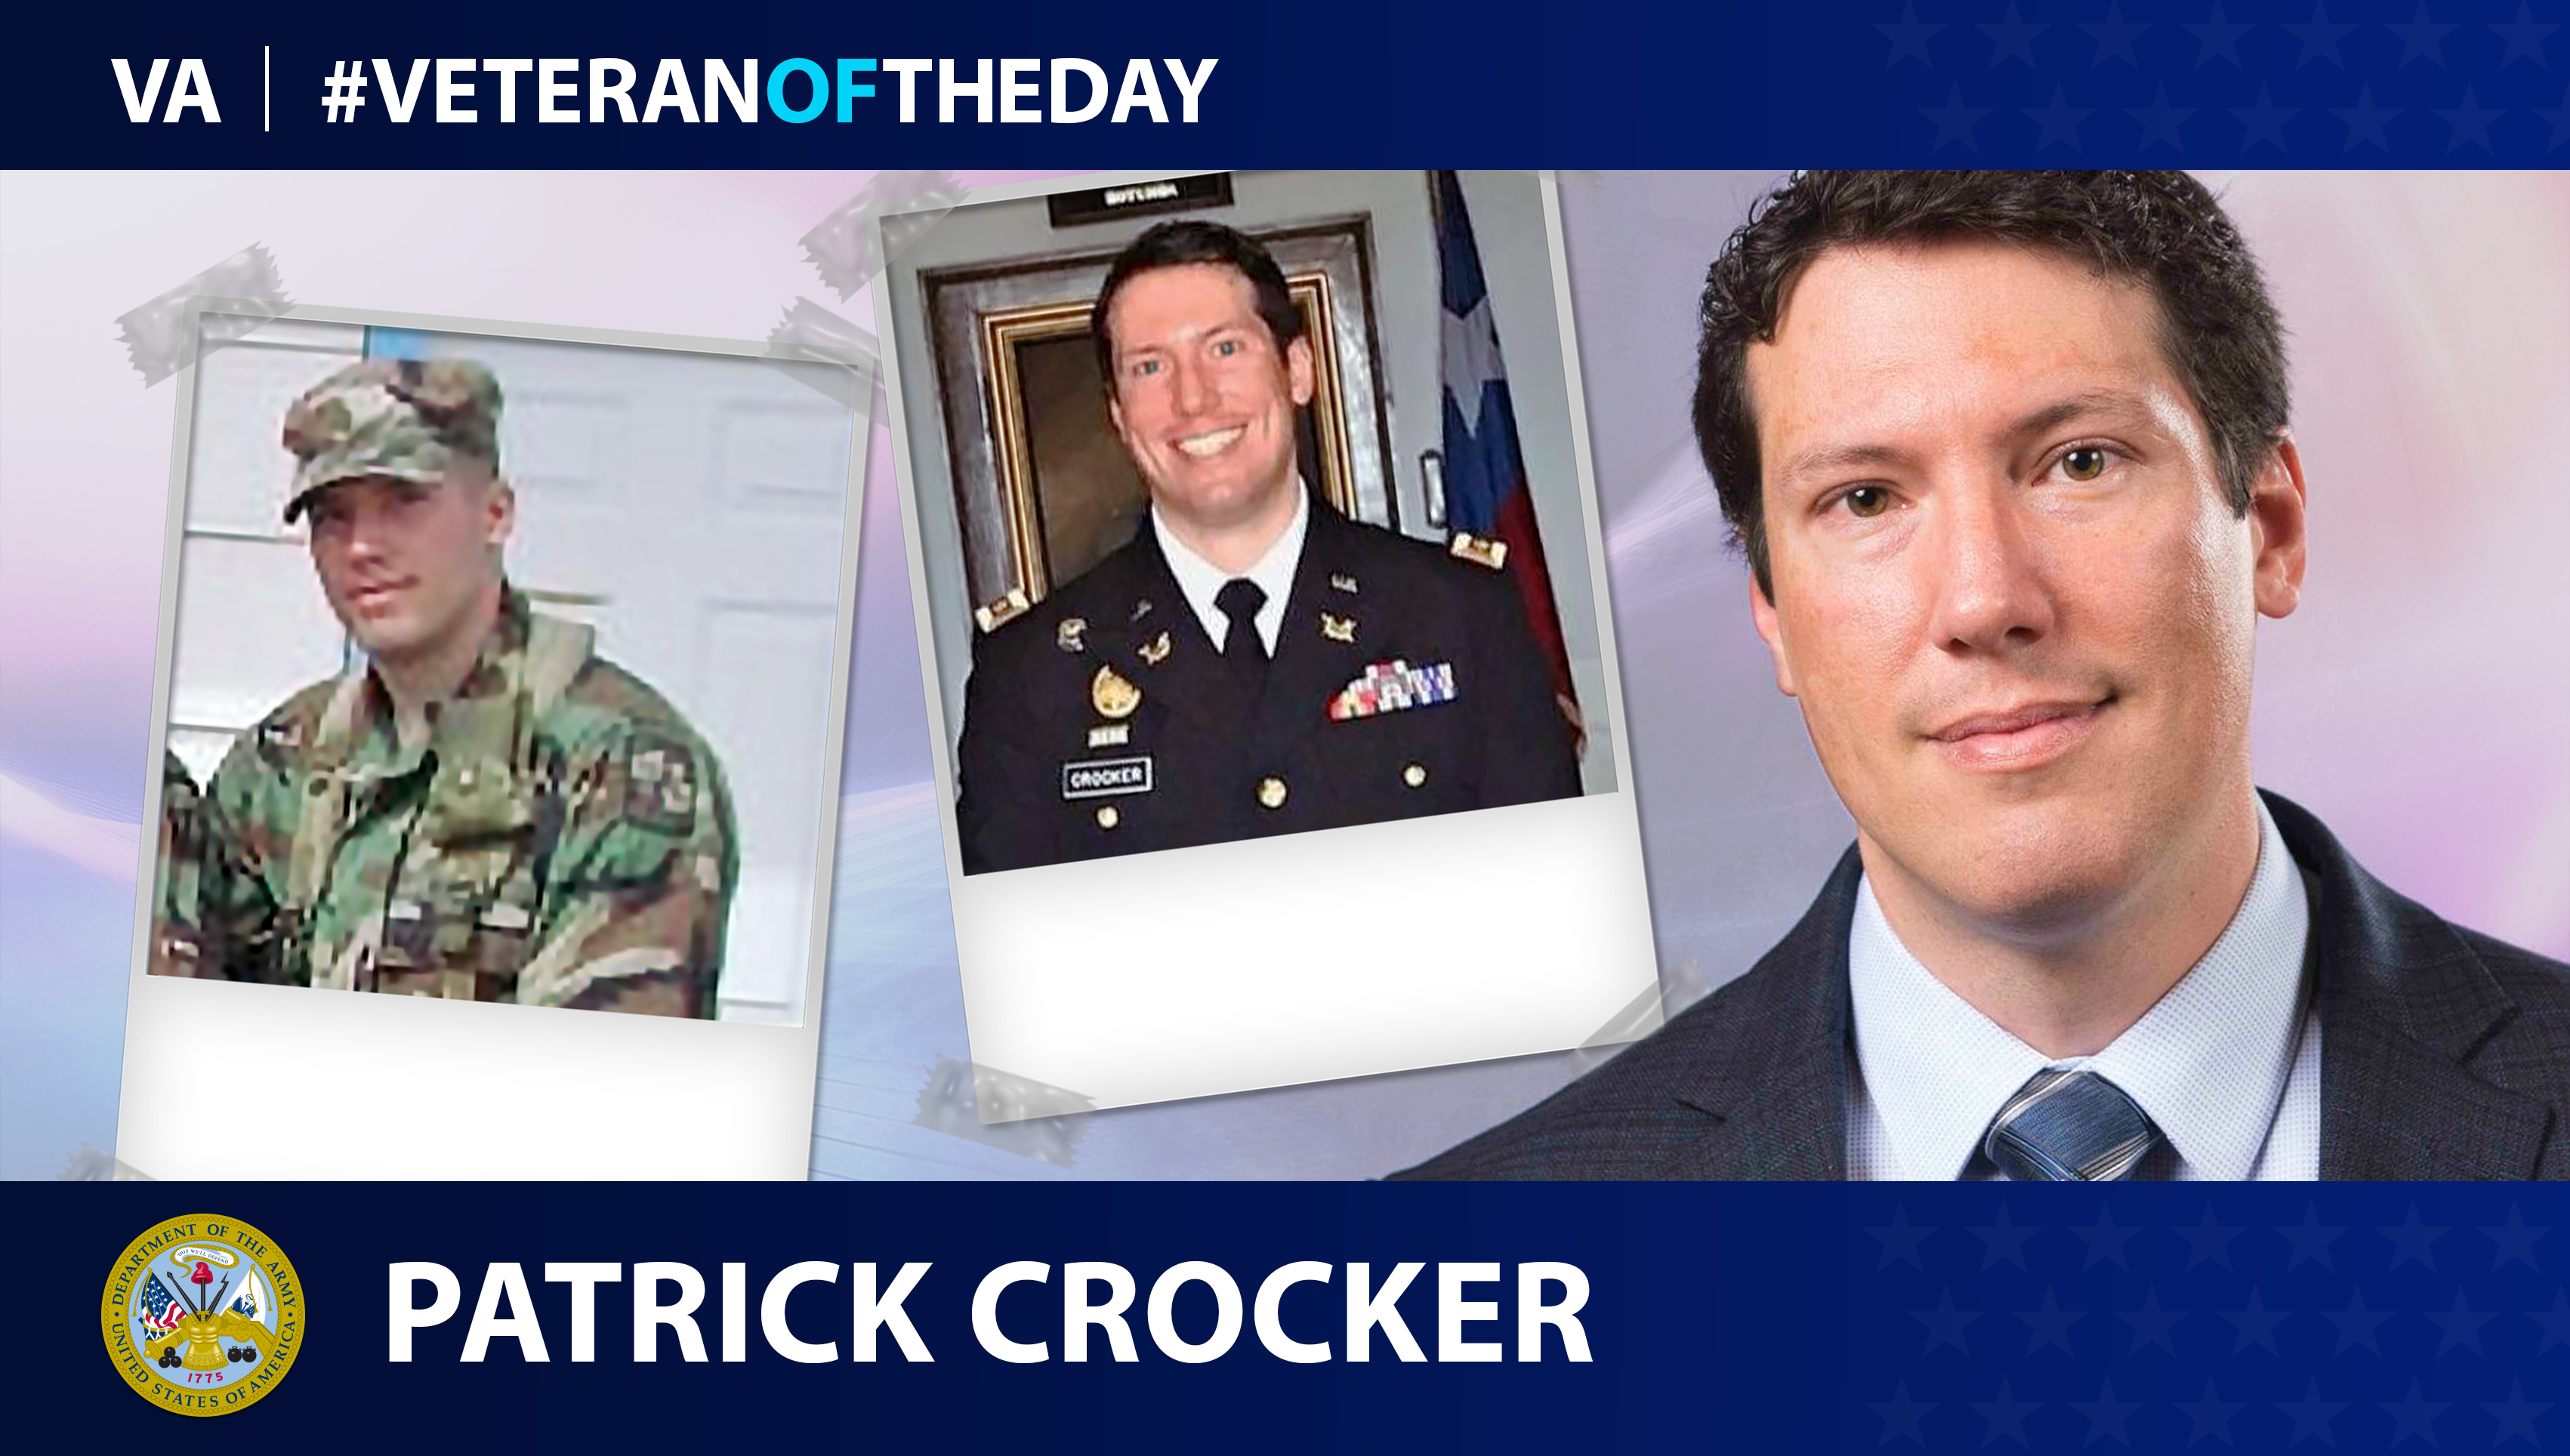 Army Veteran Patrick Crocker is today's Veteran of the Day.